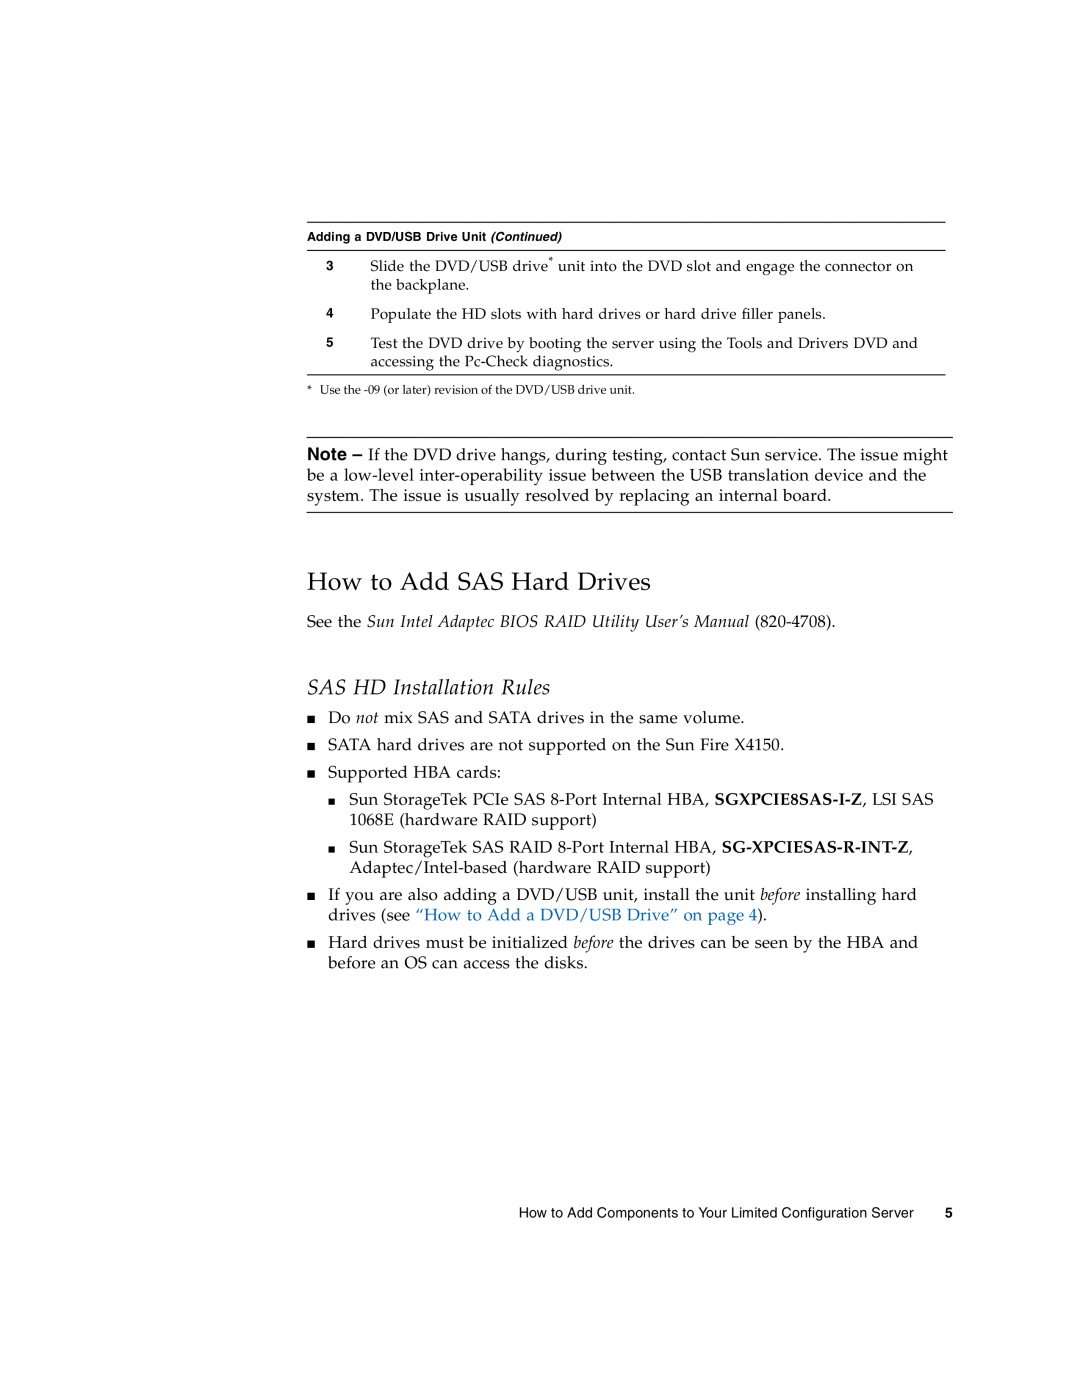 Sun Microsystems X4150 manual How to Add SAS Hard Drives, SAS HD Installation Rules 